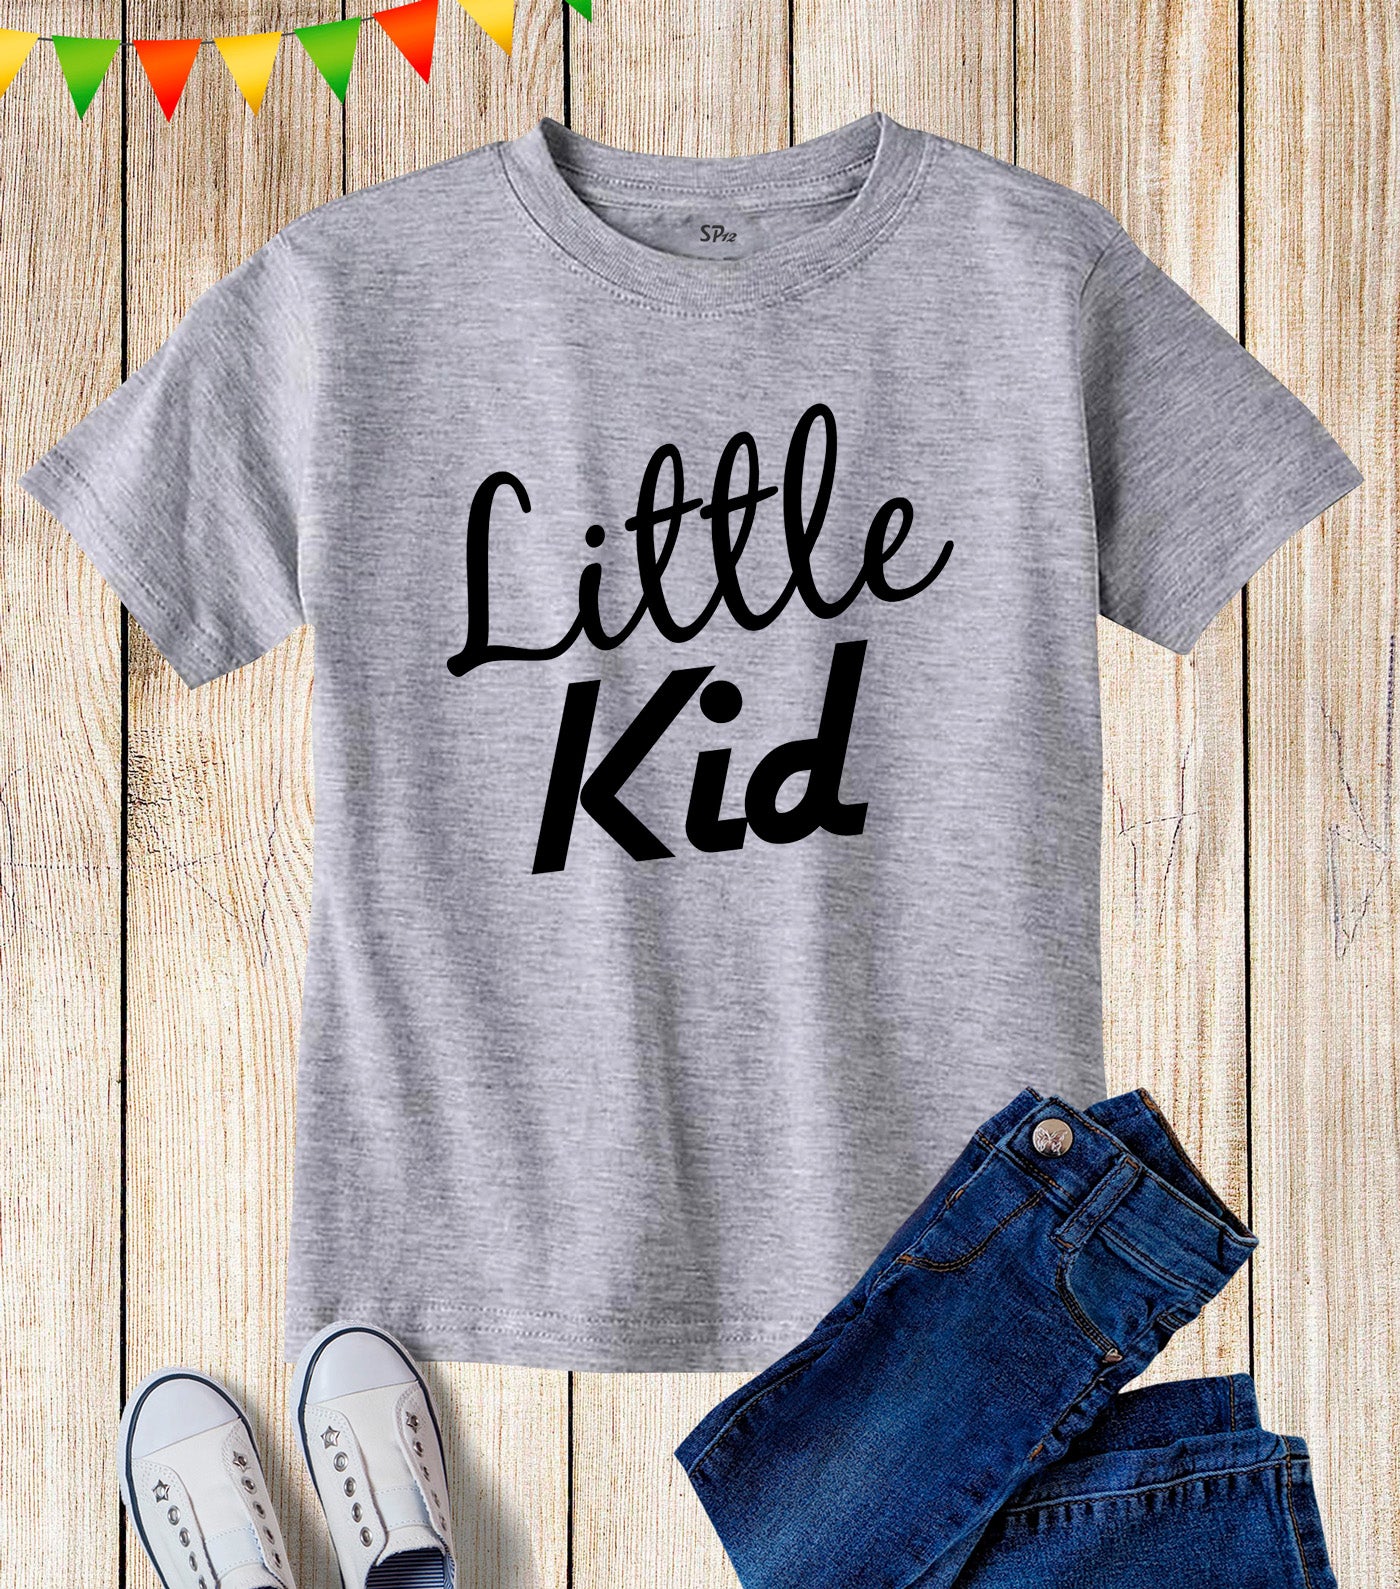 Little Kid Funny slogan T Shirt gift tee